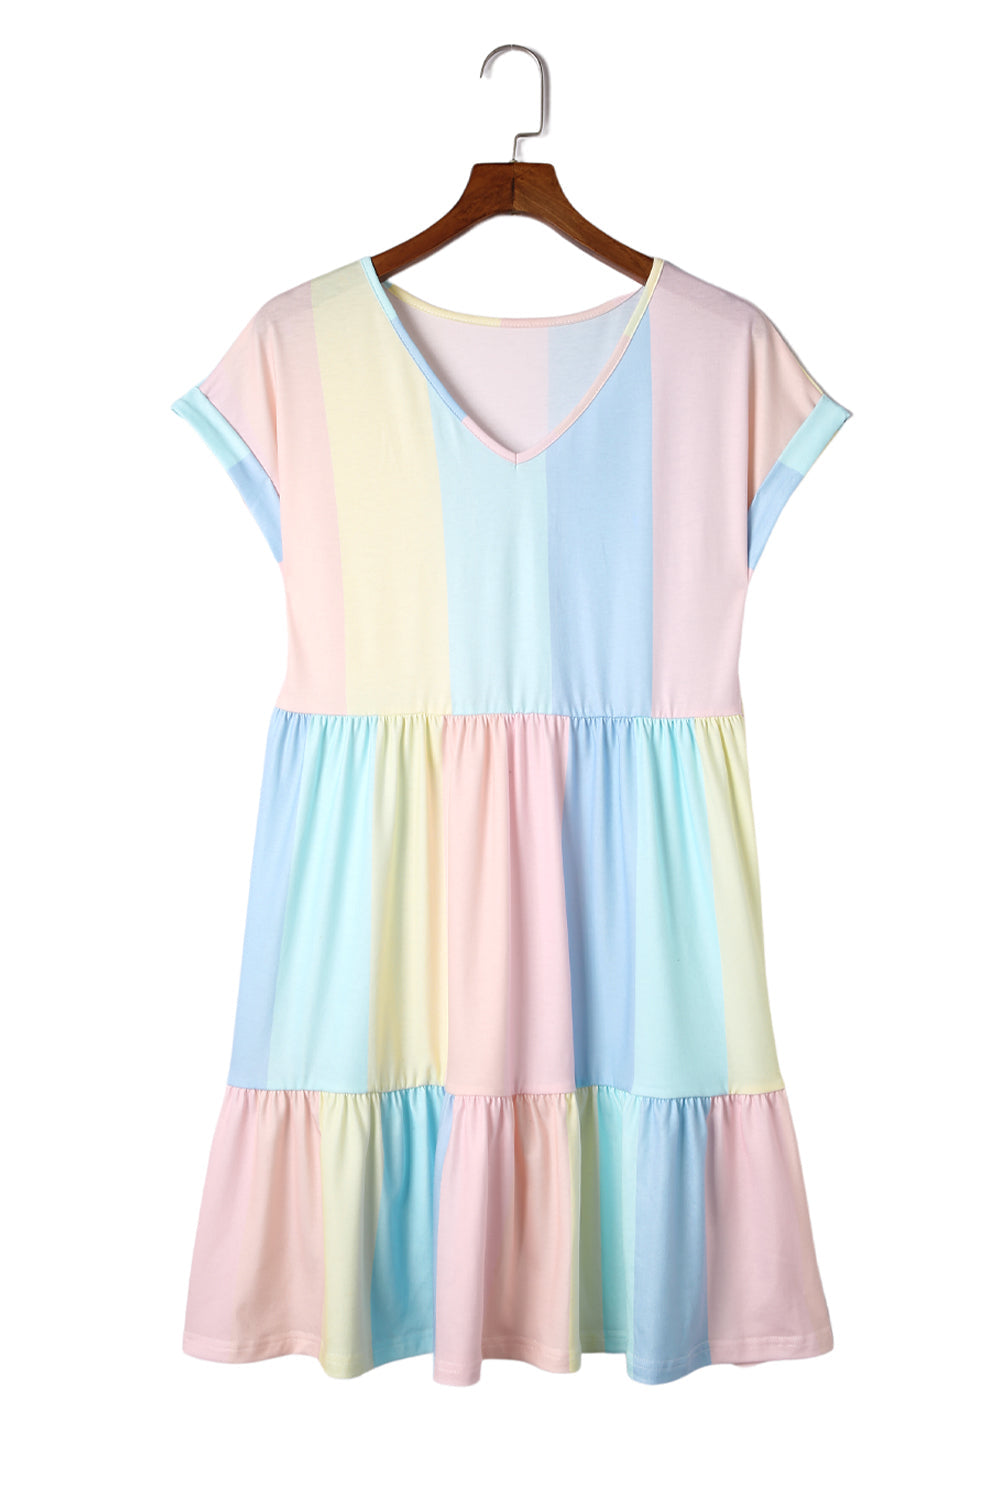 V Neck Short Sleeve Mini Dress Striped Color Block Tiered A-Line Swing Short Dresses